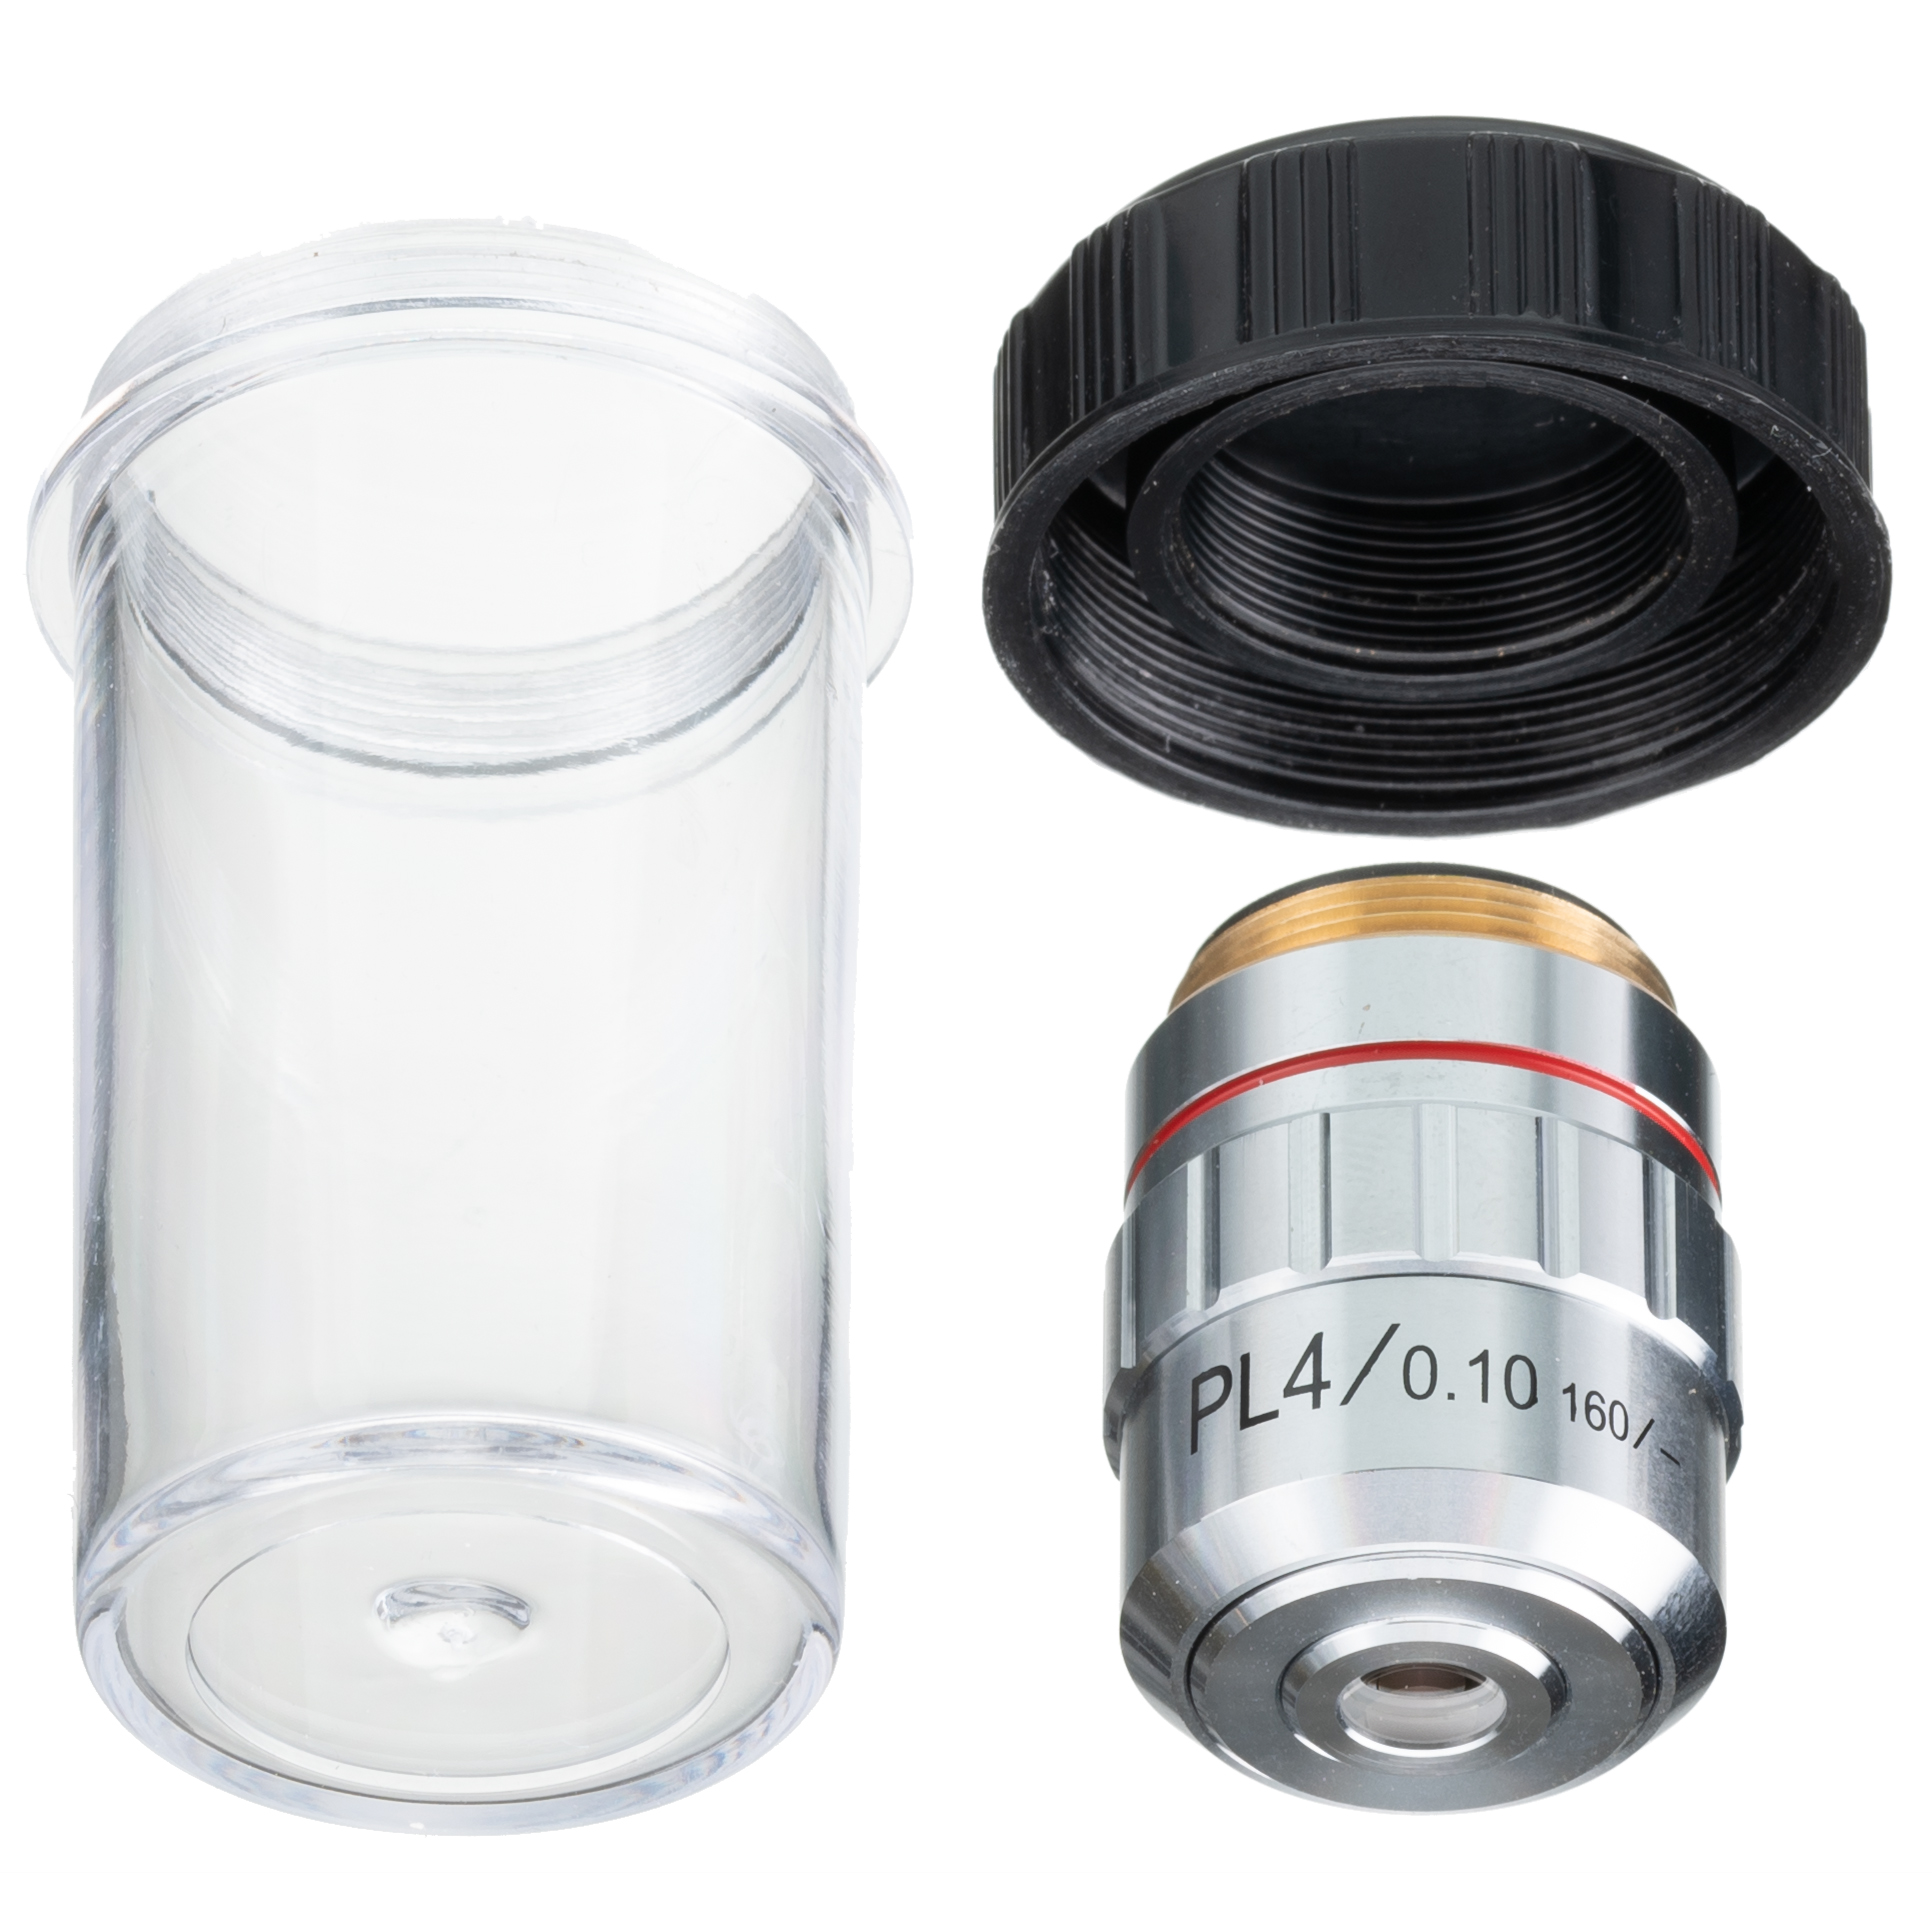 BRESSER Plan Achromatic Objective Lens 4x